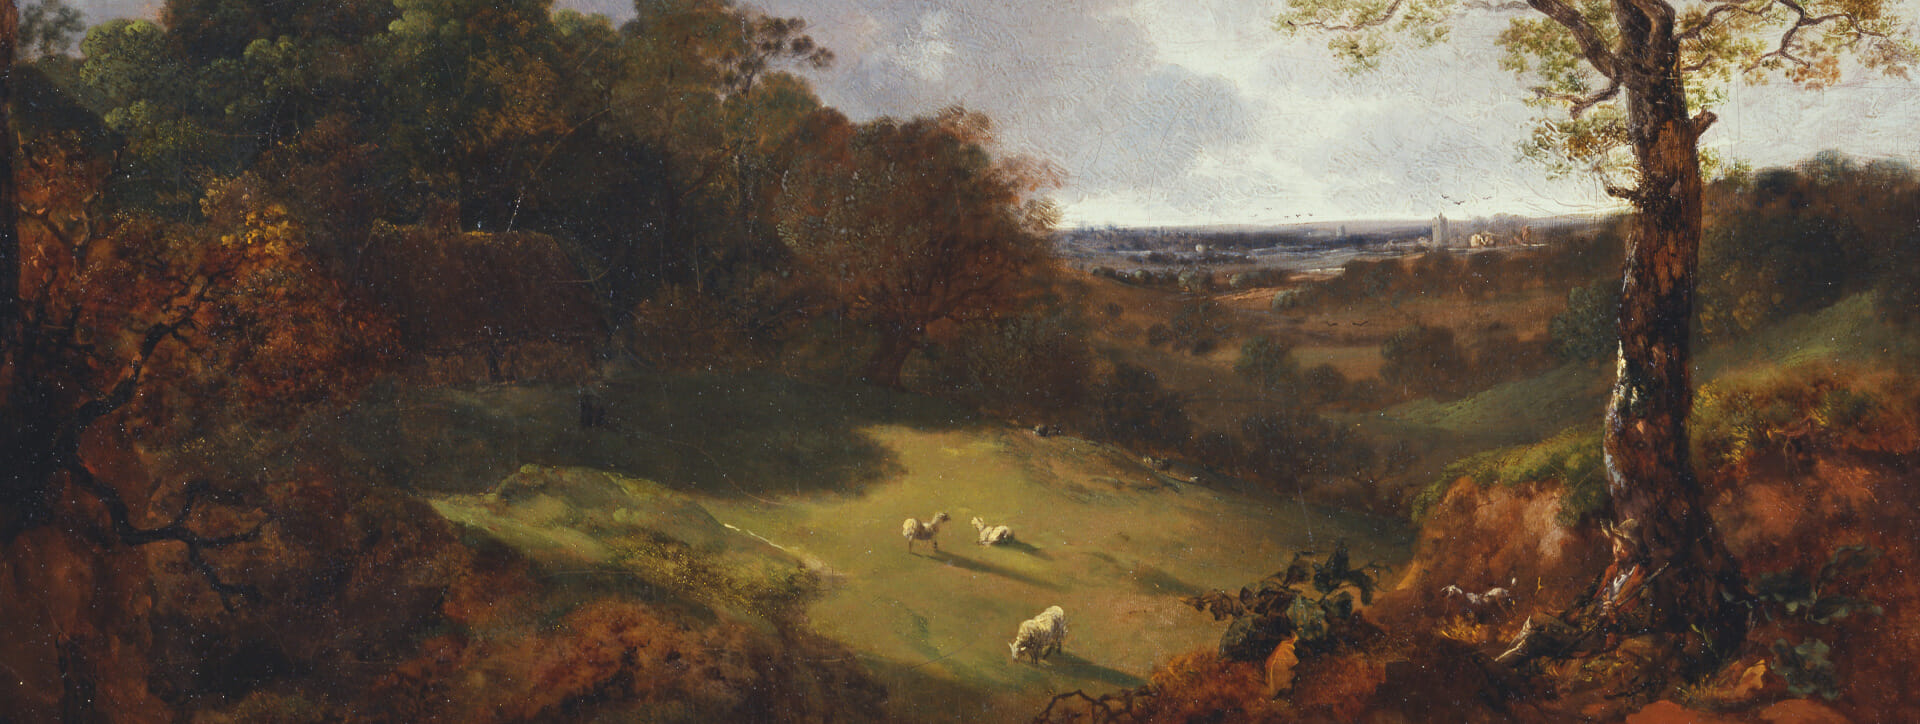 Thomas Gainsborough Landscape 1750